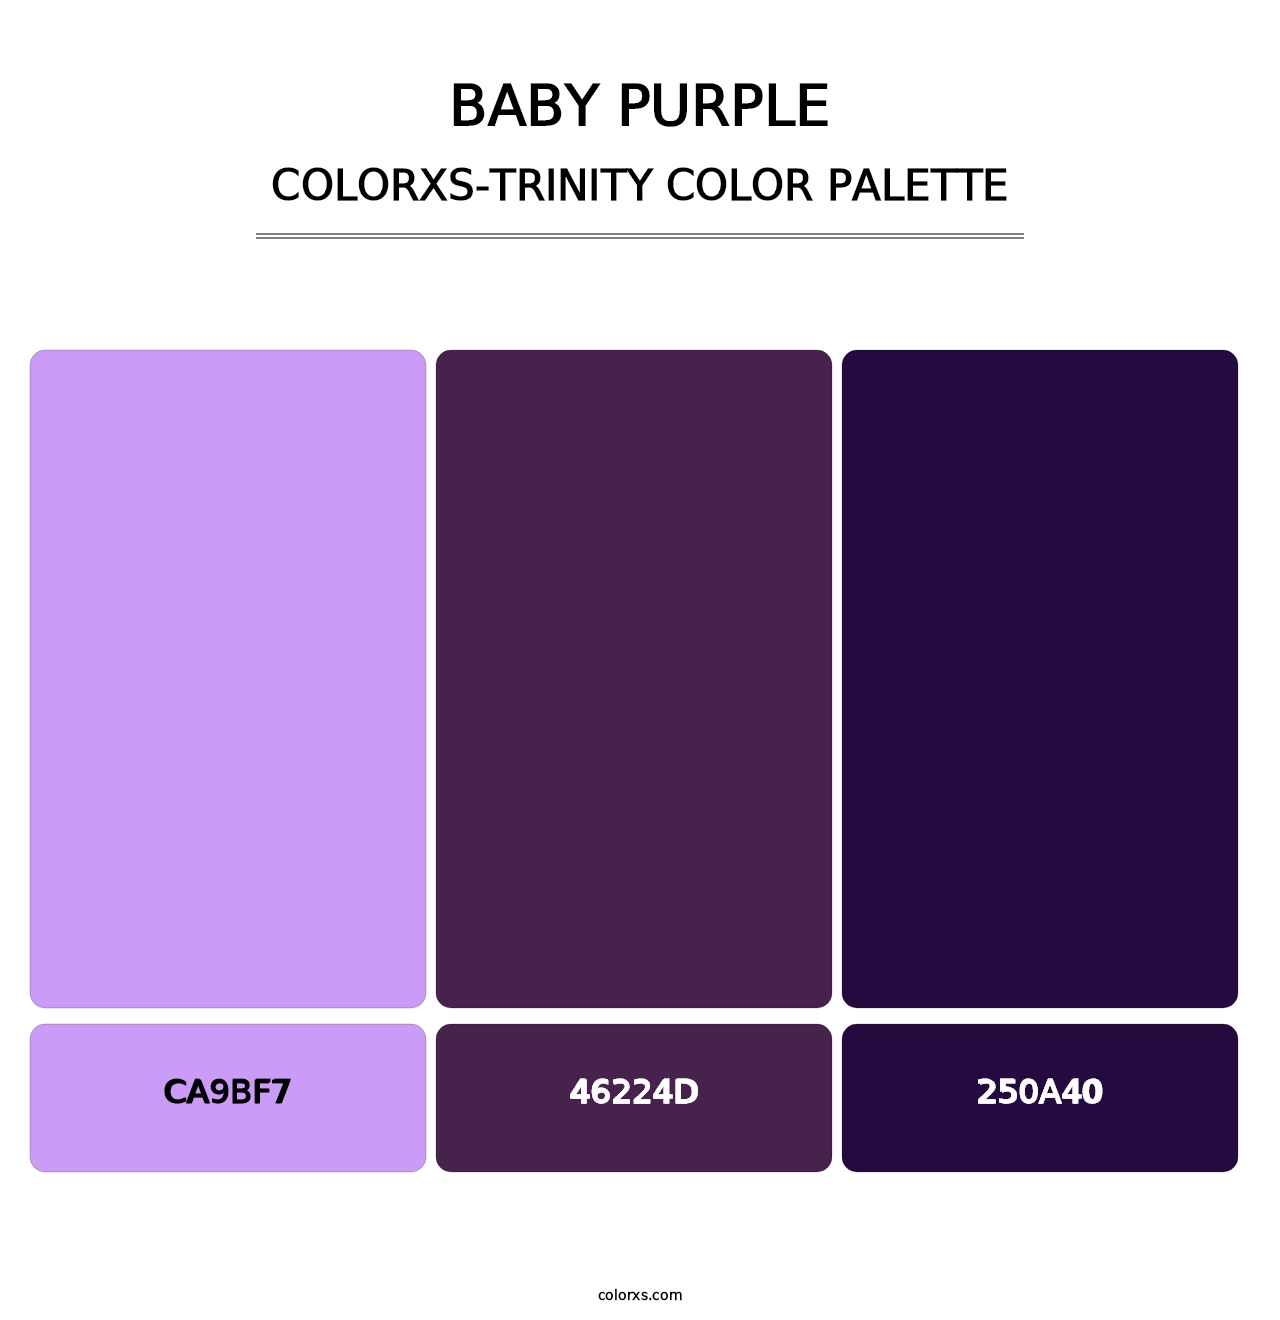 Baby Purple - Colorxs Trinity Palette